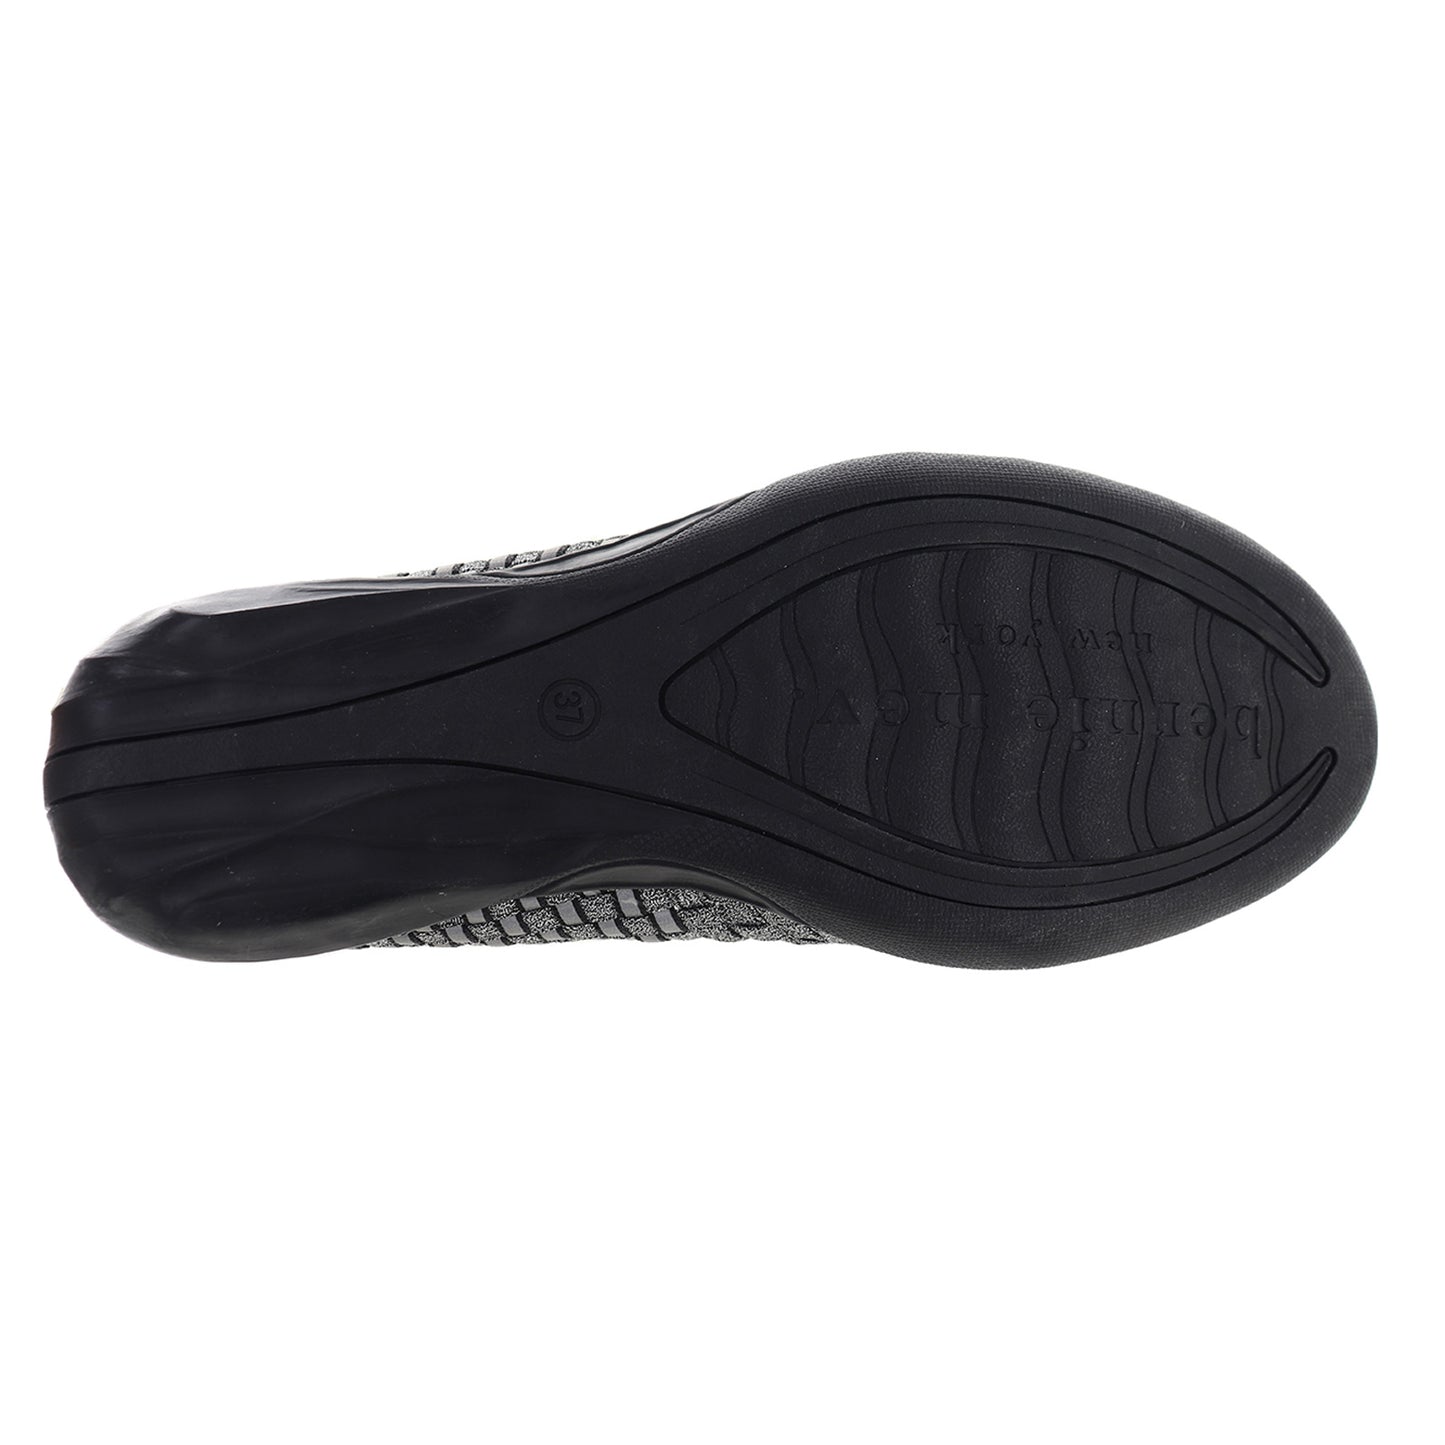 Peltz Shoes  Women's Bernie Mev Catwalk Slip-On PEWTER BLACK REFLECT CATWALK PEWBLKR